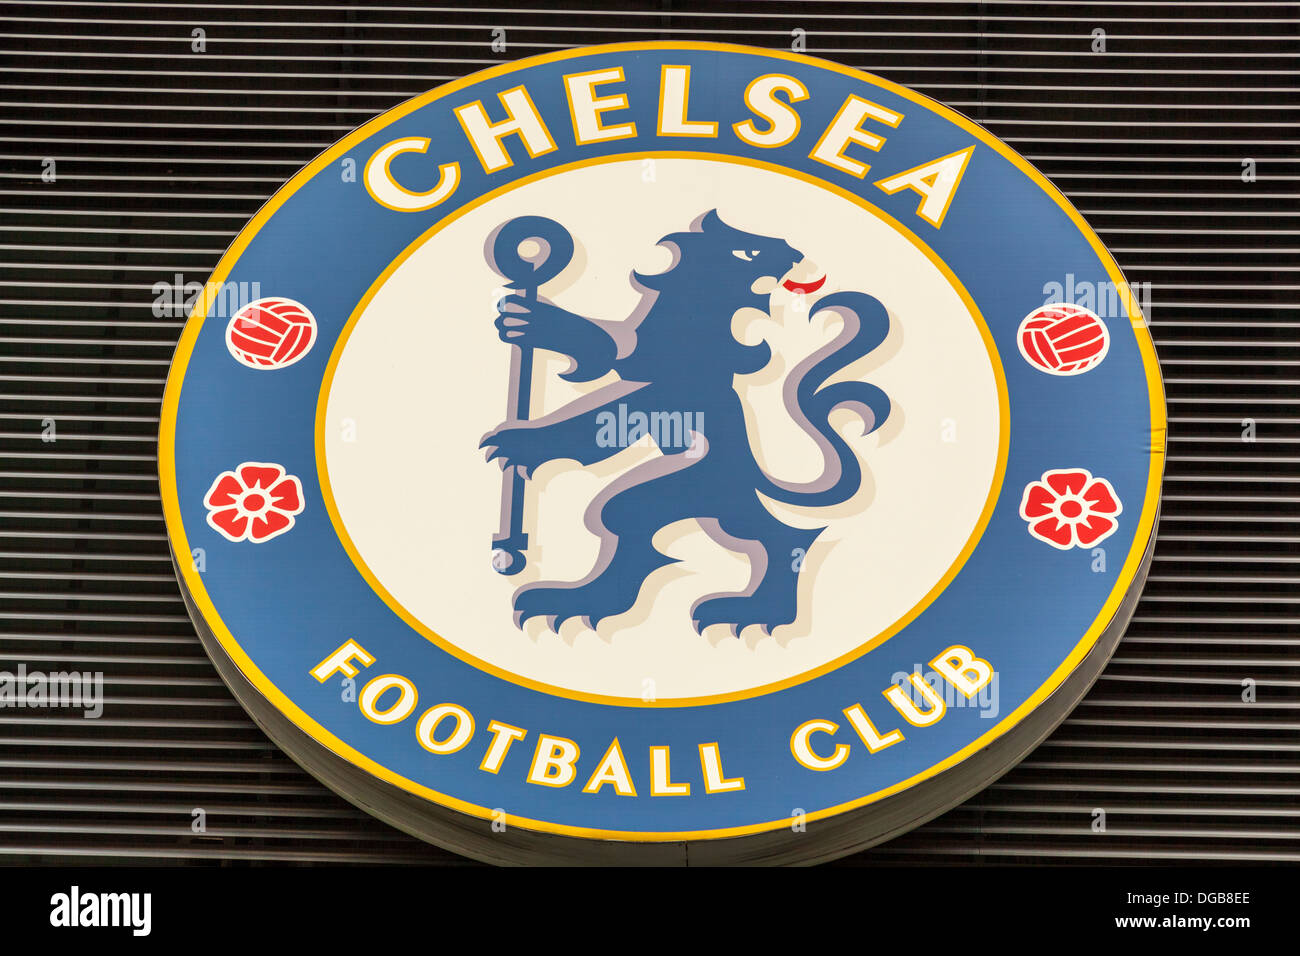 Chelsea Football Club logo on a building housing the club ...